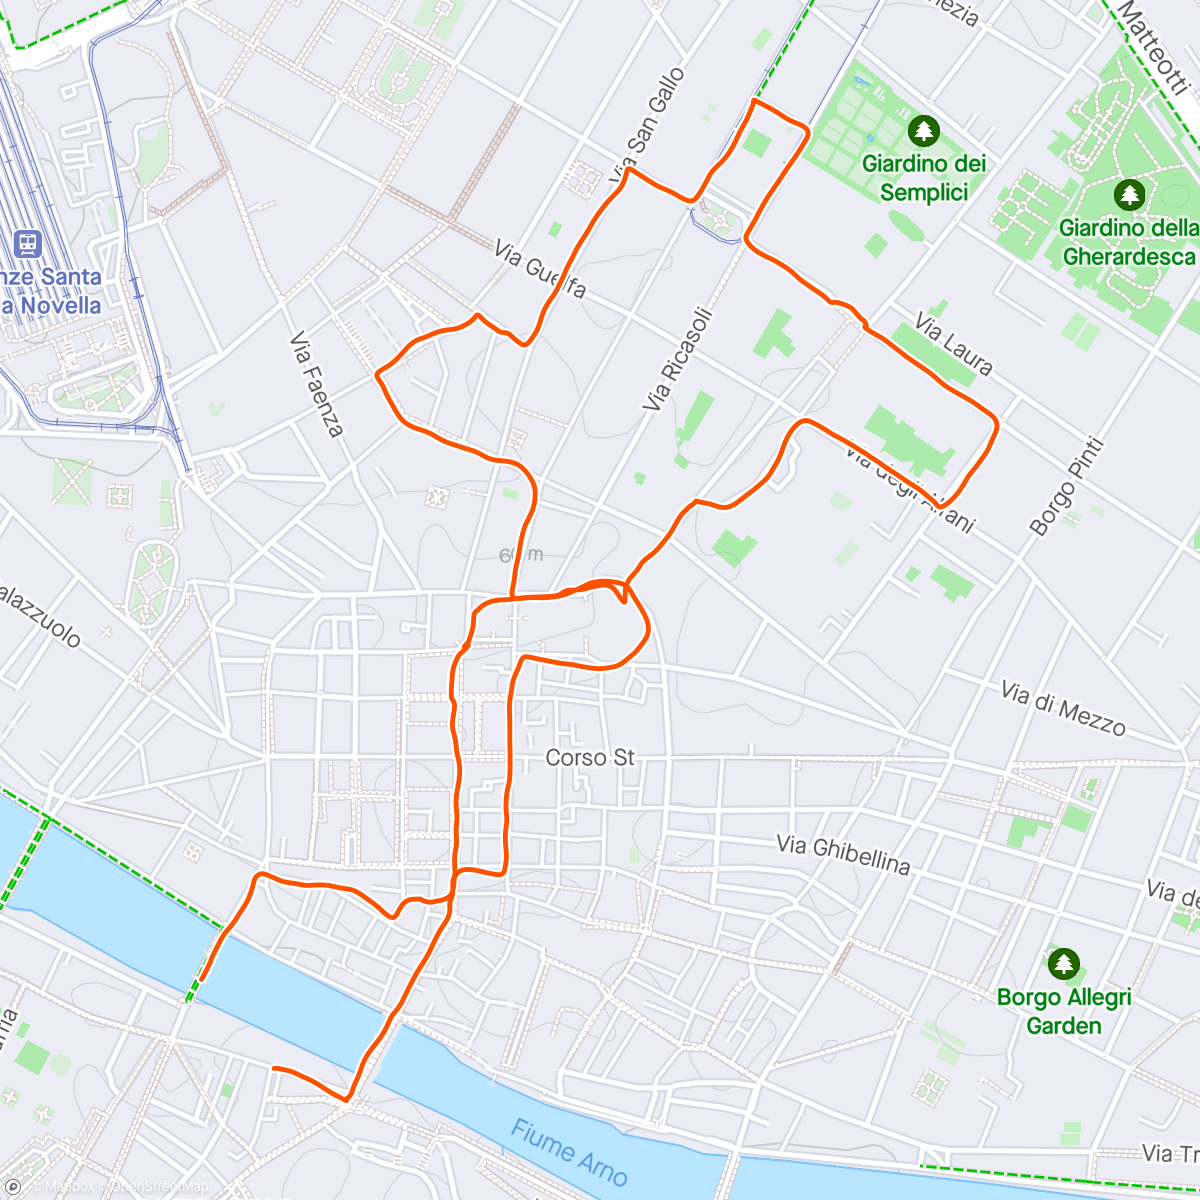 Map of the activity, “Donnie random run” through Florence